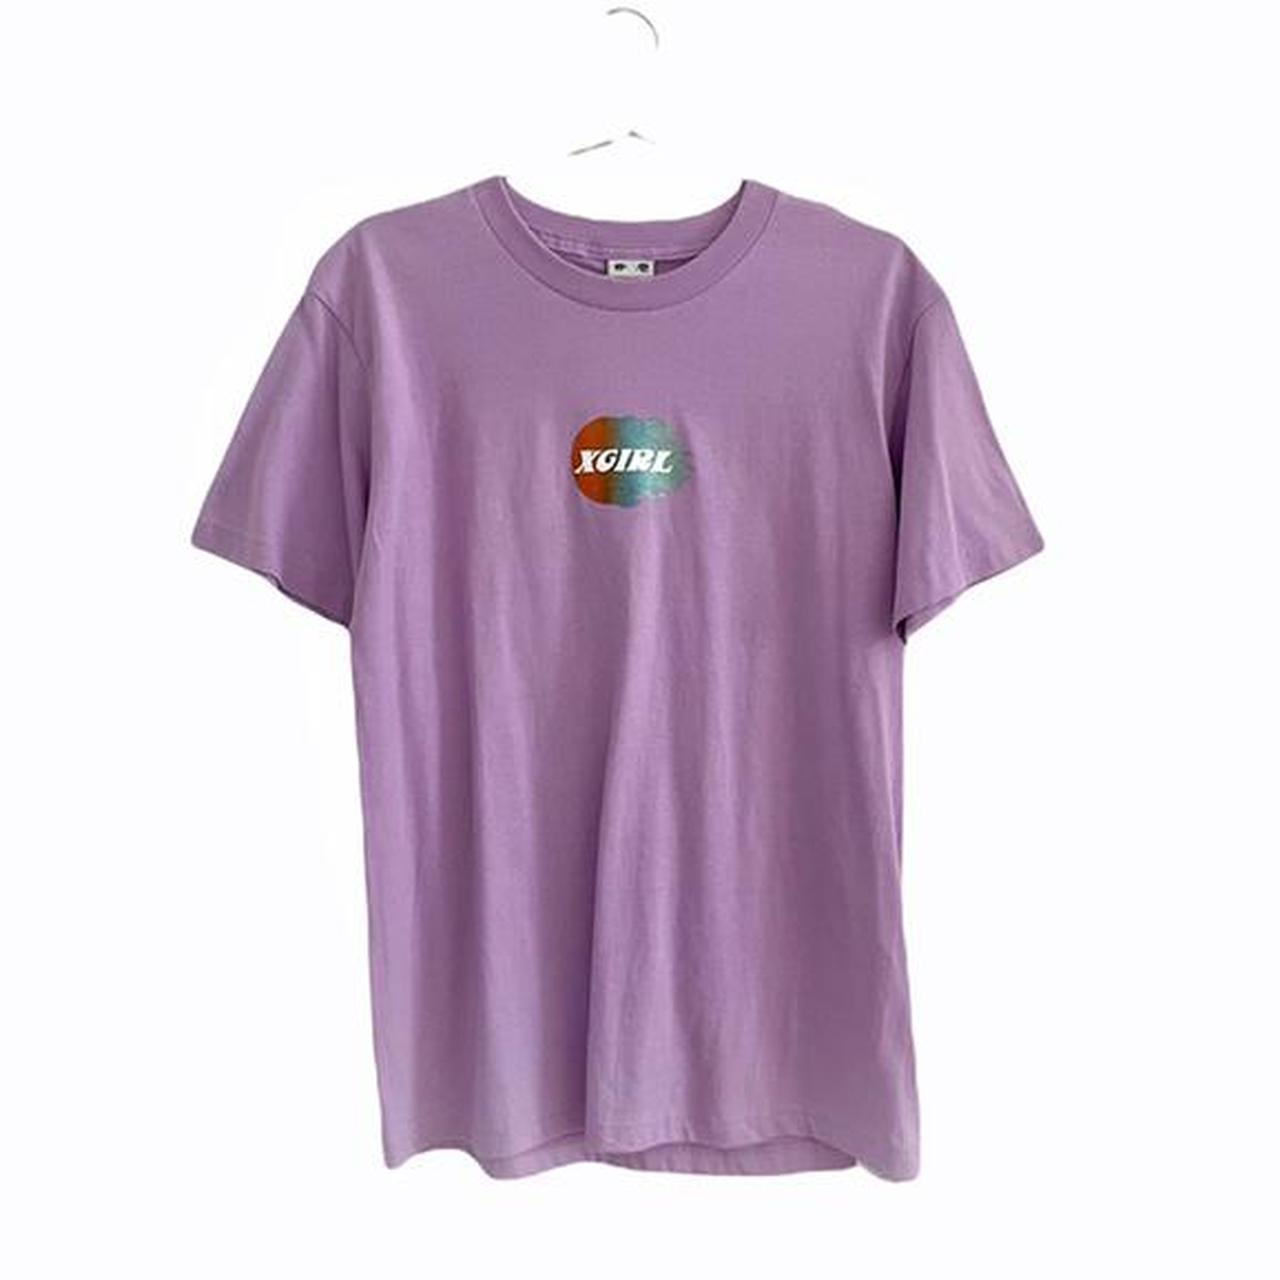 X-Girl  Women's Pink and Purple T-shirt (4)